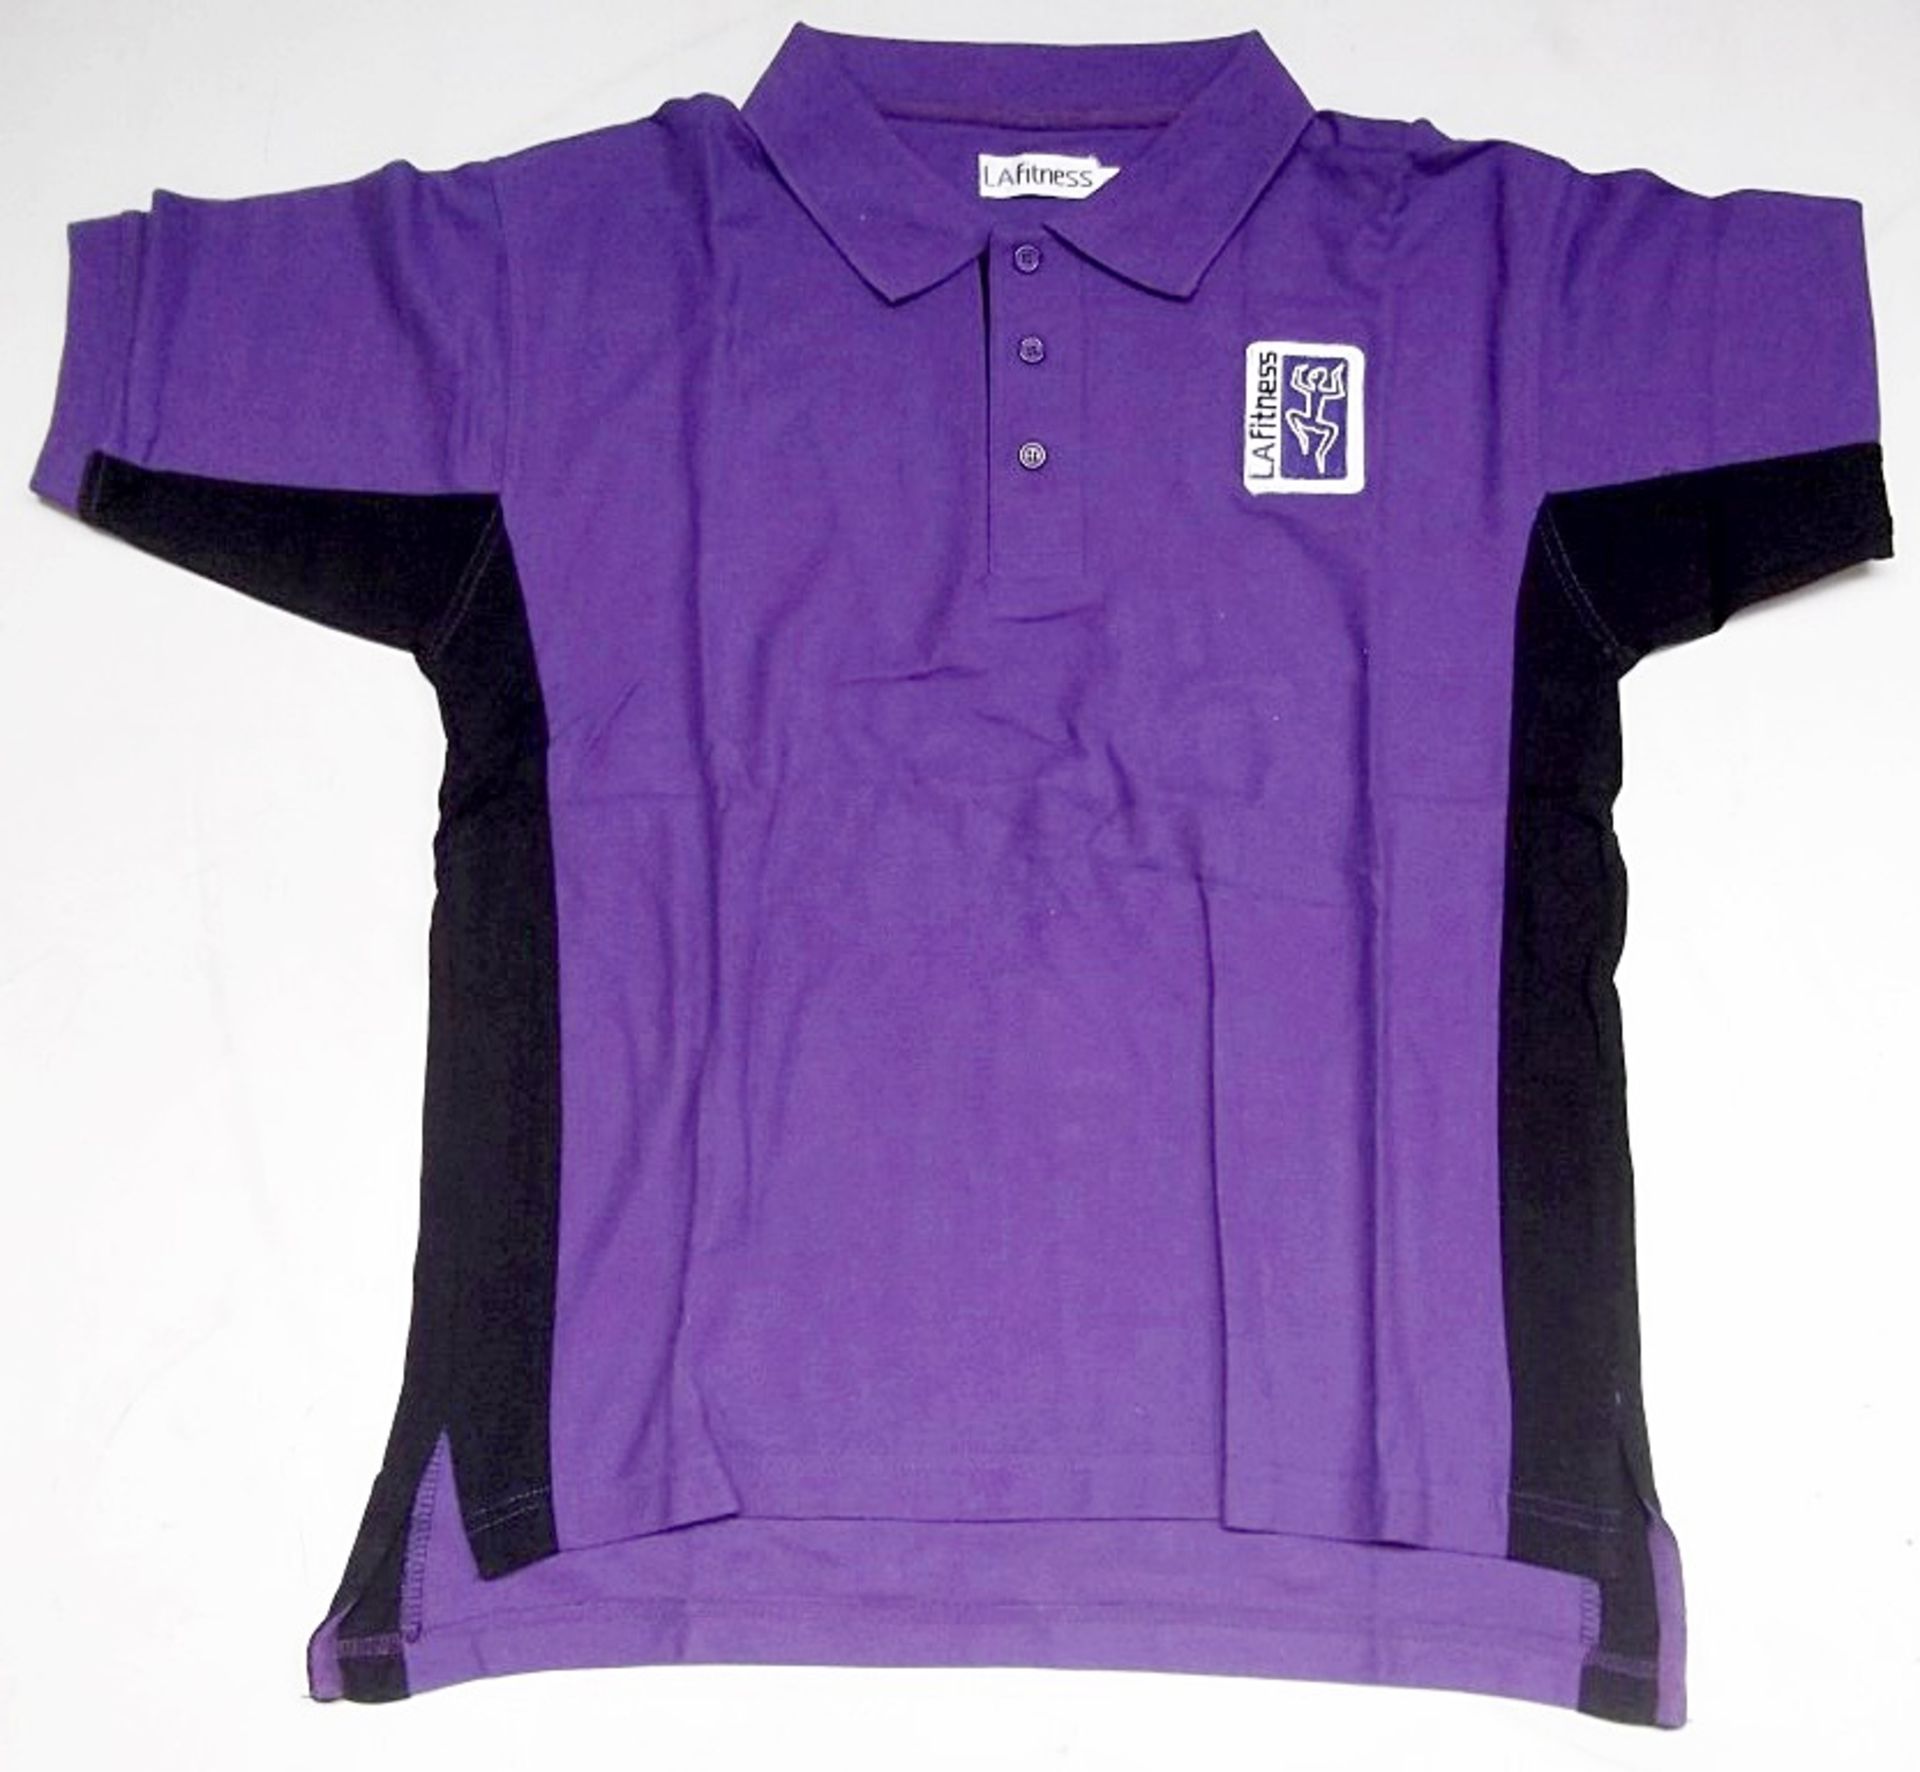 10 x LA Fitness Branded POLO Shirts - Size XXXL - Colour: Purple - CL155 - New & Sealed -